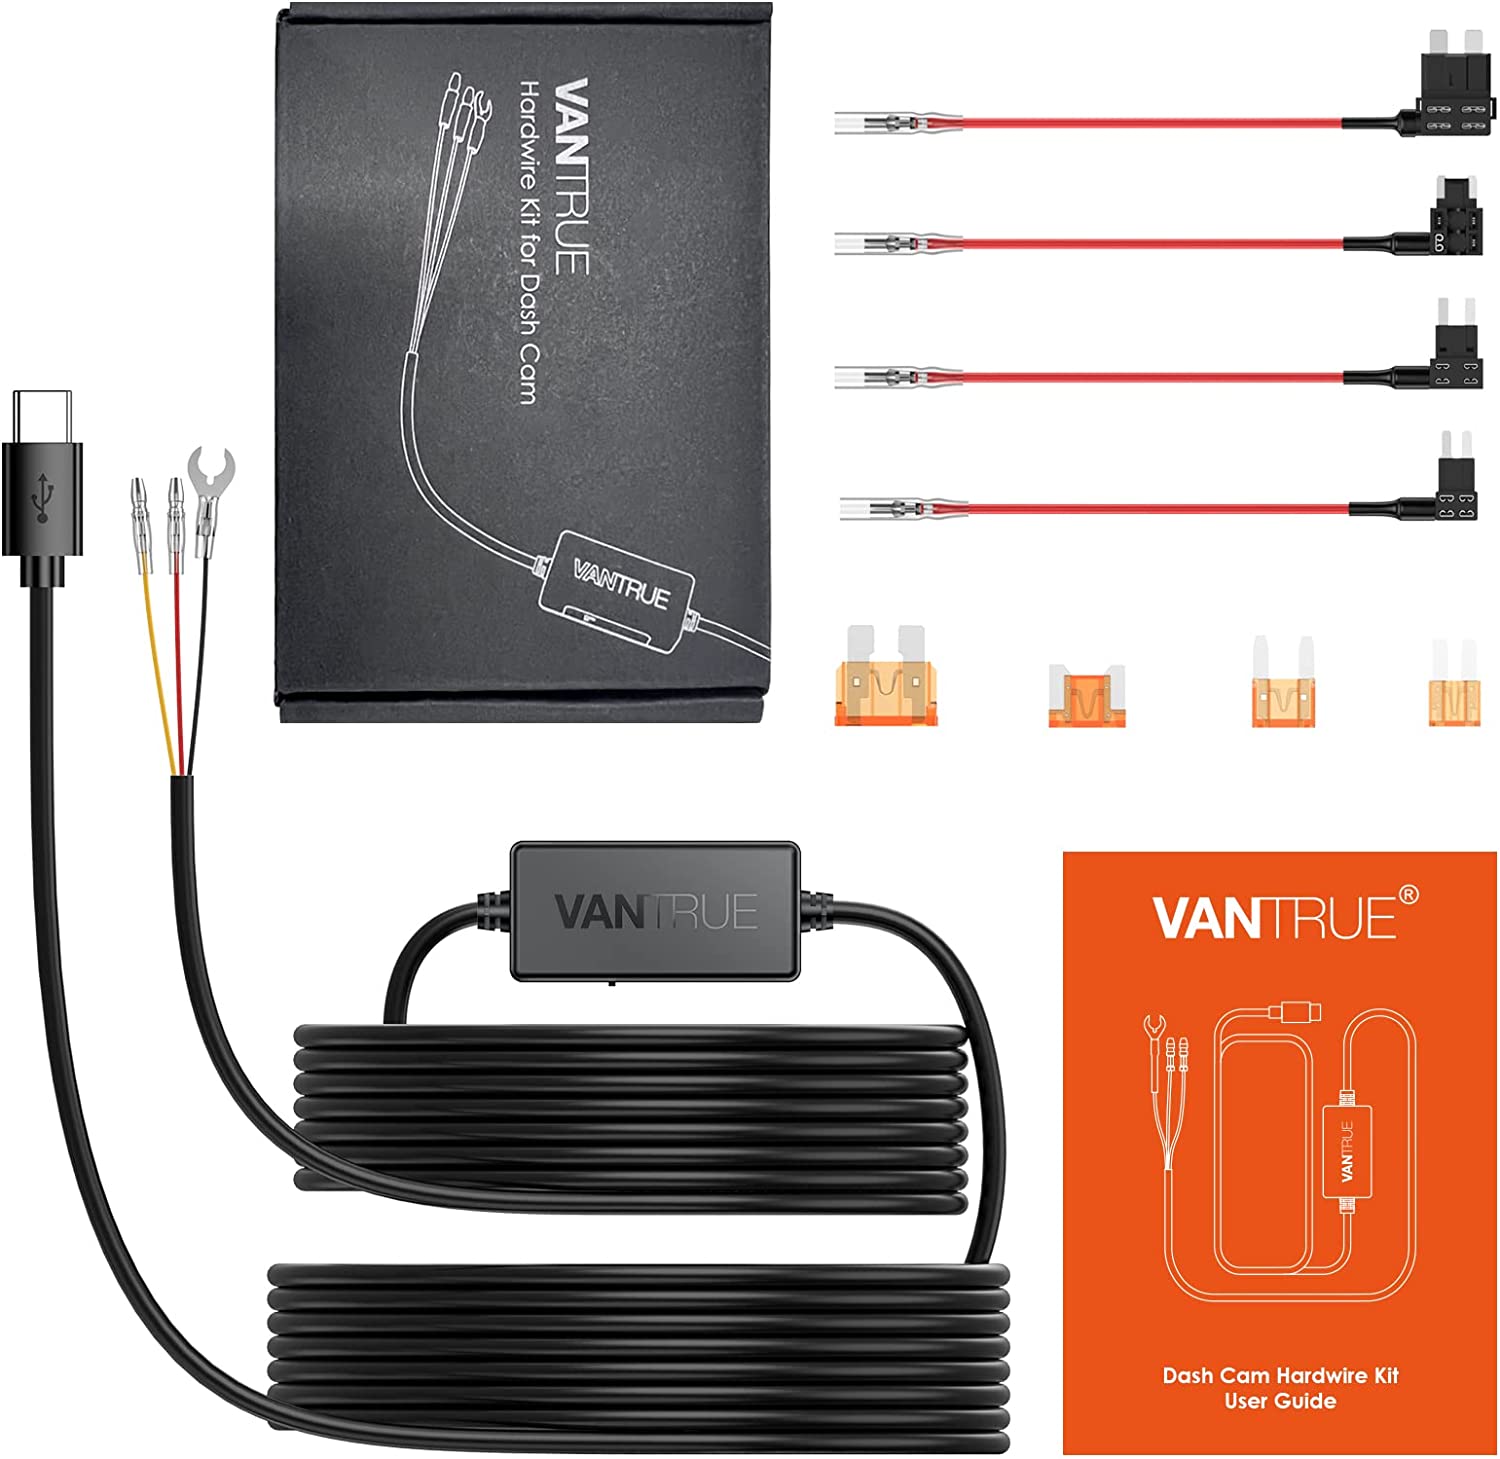 Vantrue USB C Dash Cam Hardwire Kit - 12V to 5V USB+Fuse Taps (FOR N4/n2s Only)